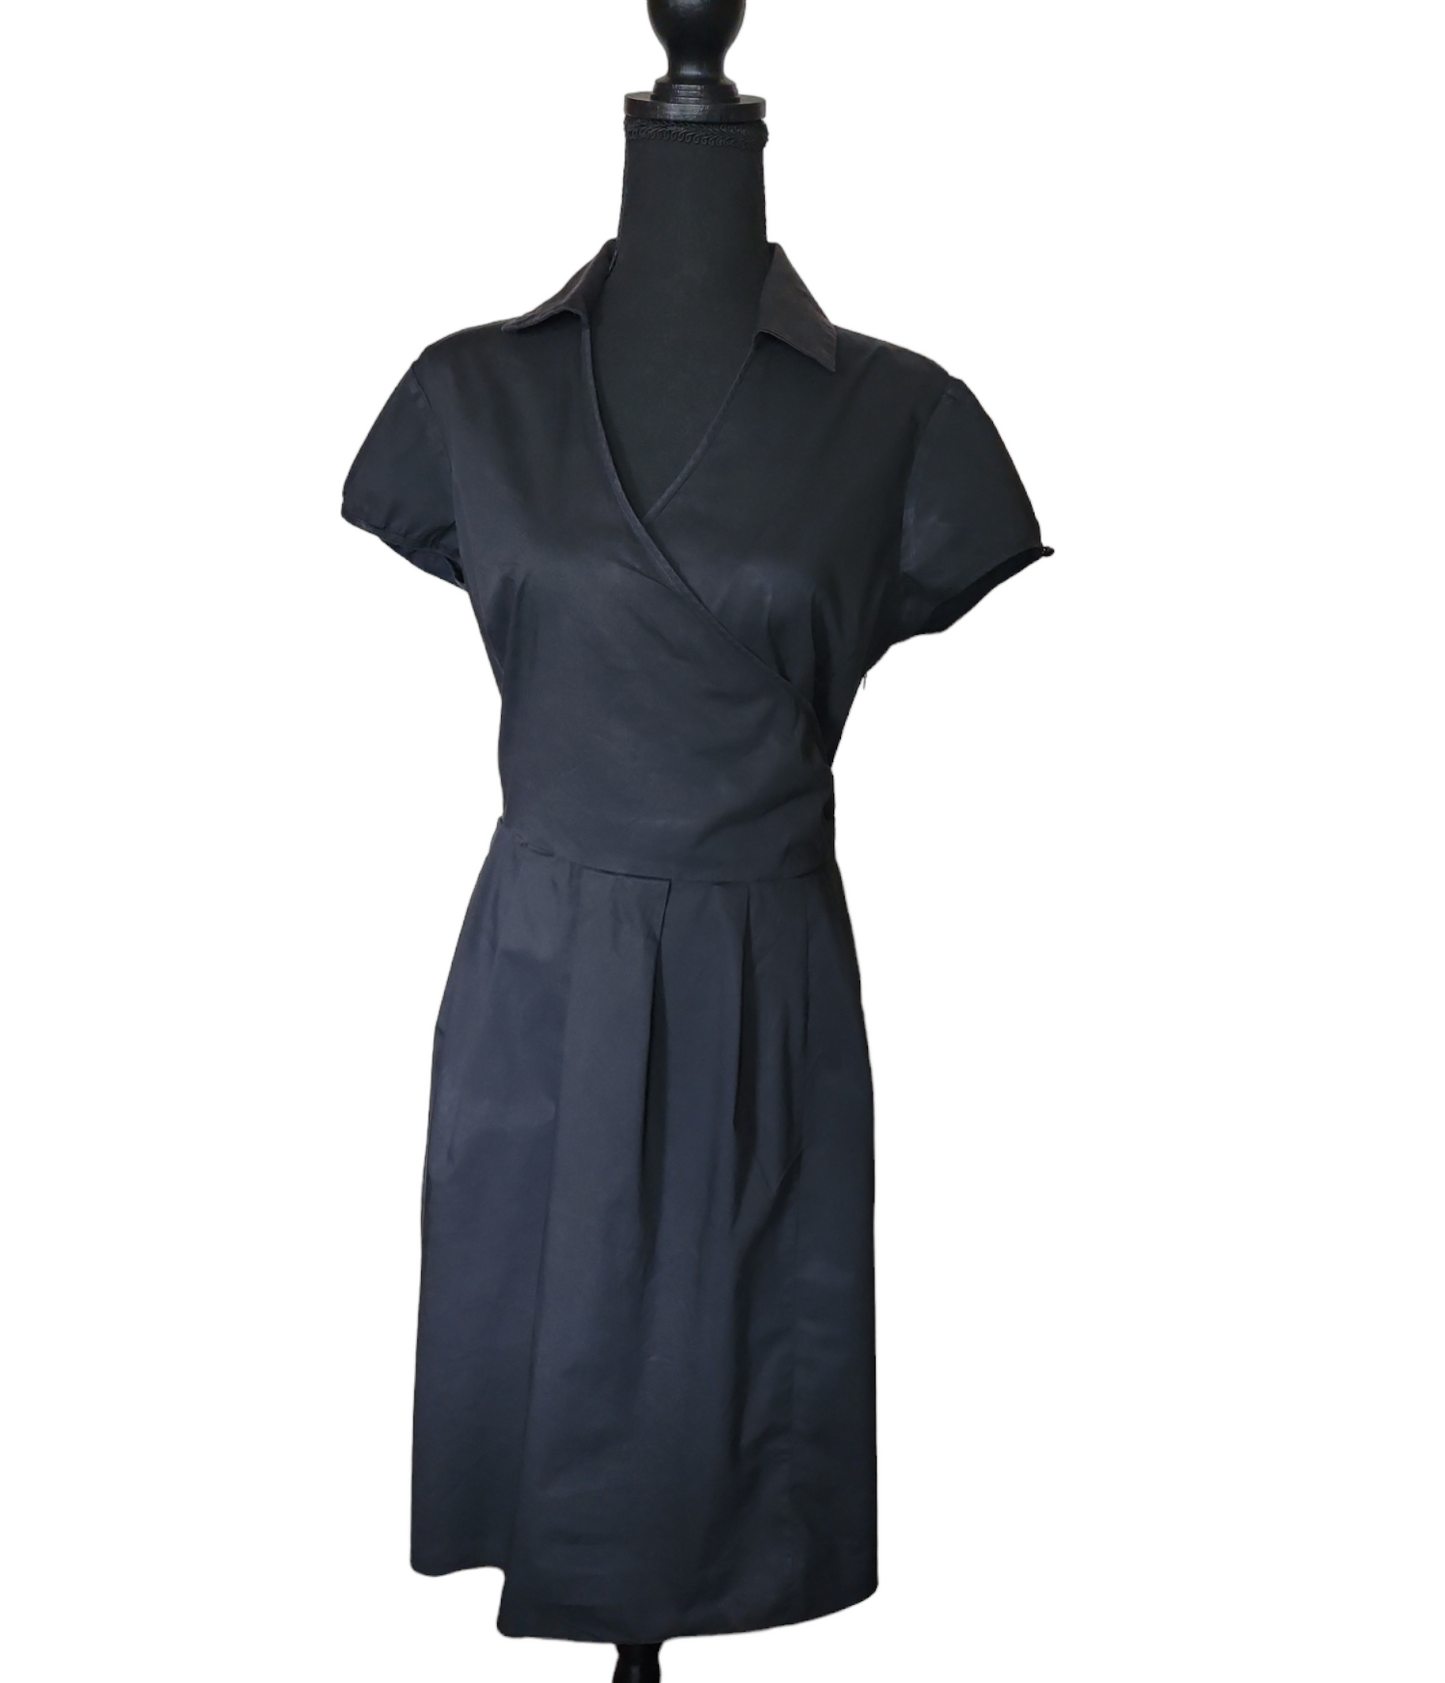 Alfani - Black Wrapped Top Shirt Dress